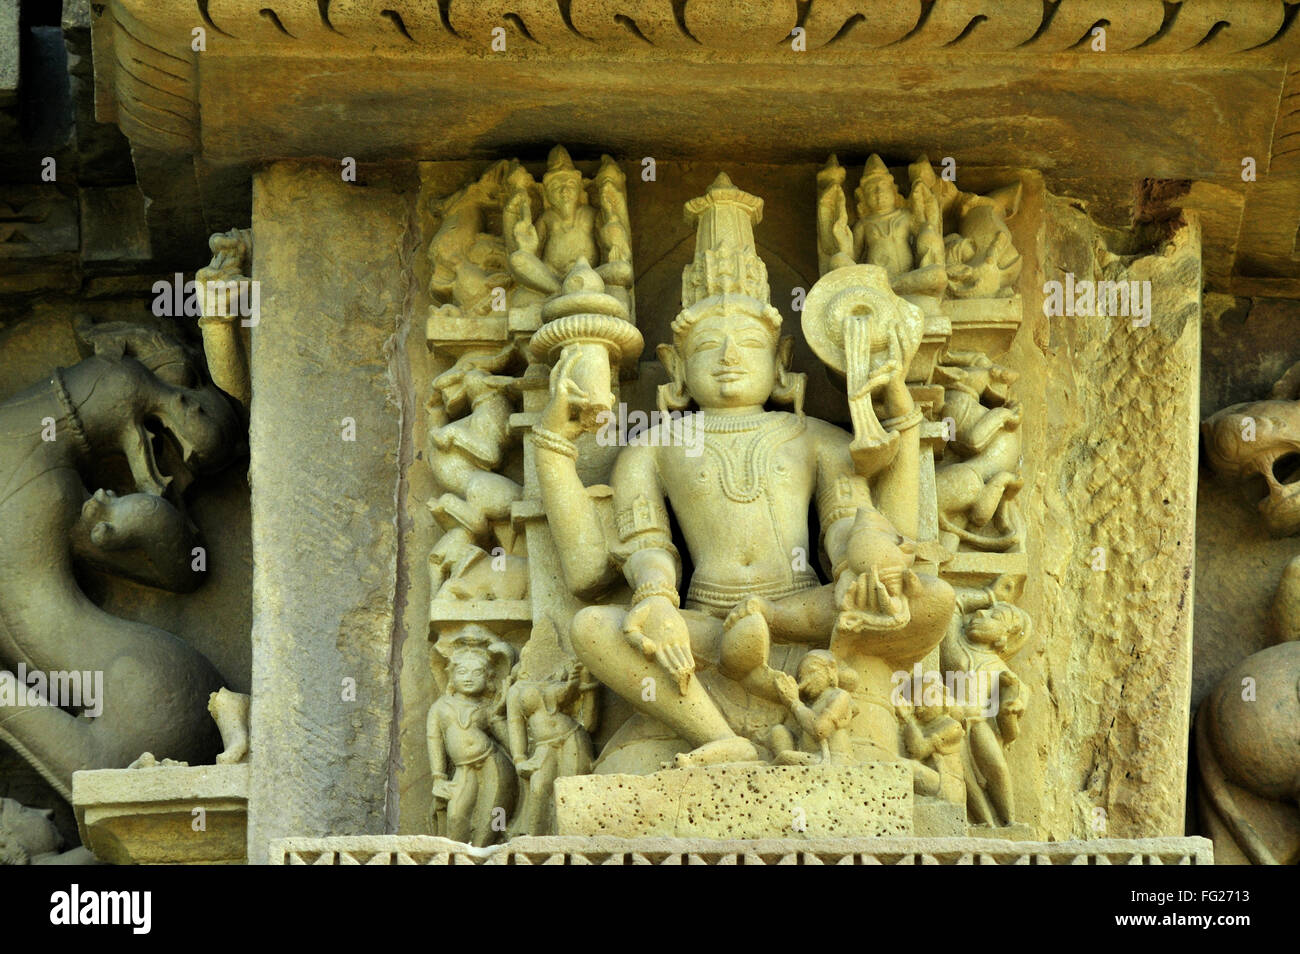 Sur le mur de Vishnu temple chaturbhuj Khajuraho Madhya Pradesh, Inde Banque D'Images